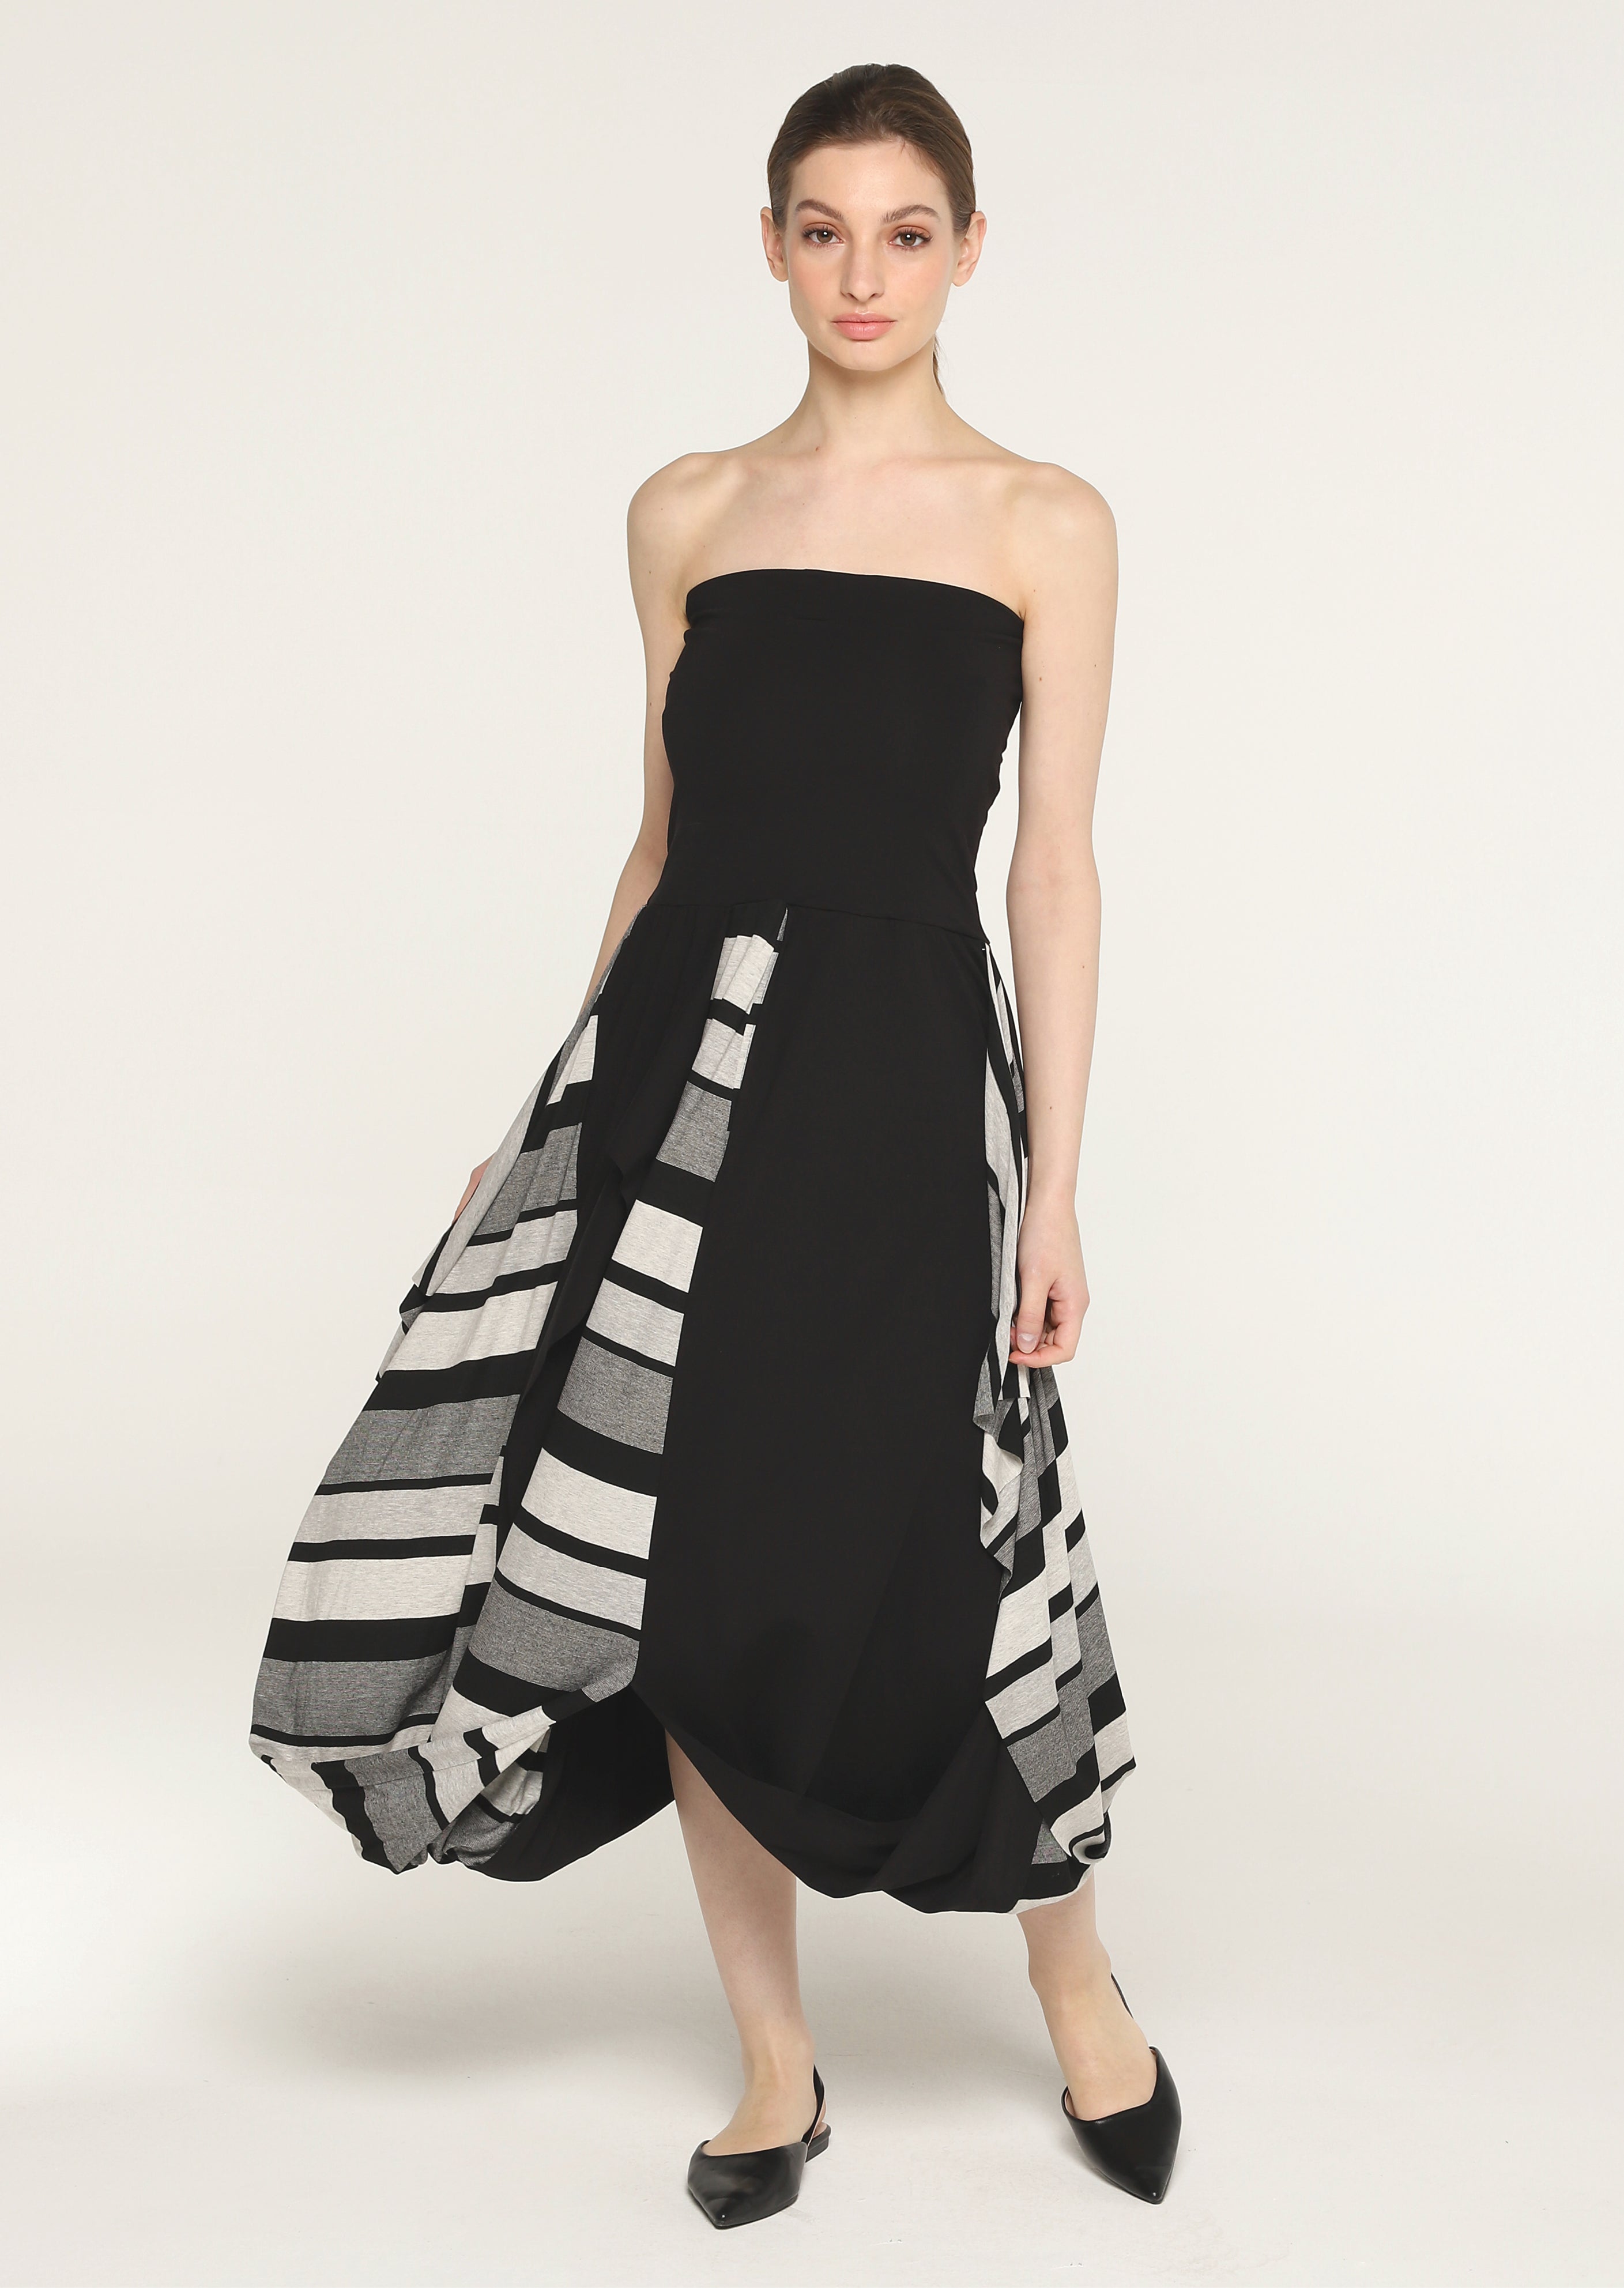 Igor Dobranic Elvira Dress/Skirt, Black Stripe - Statement Boutique